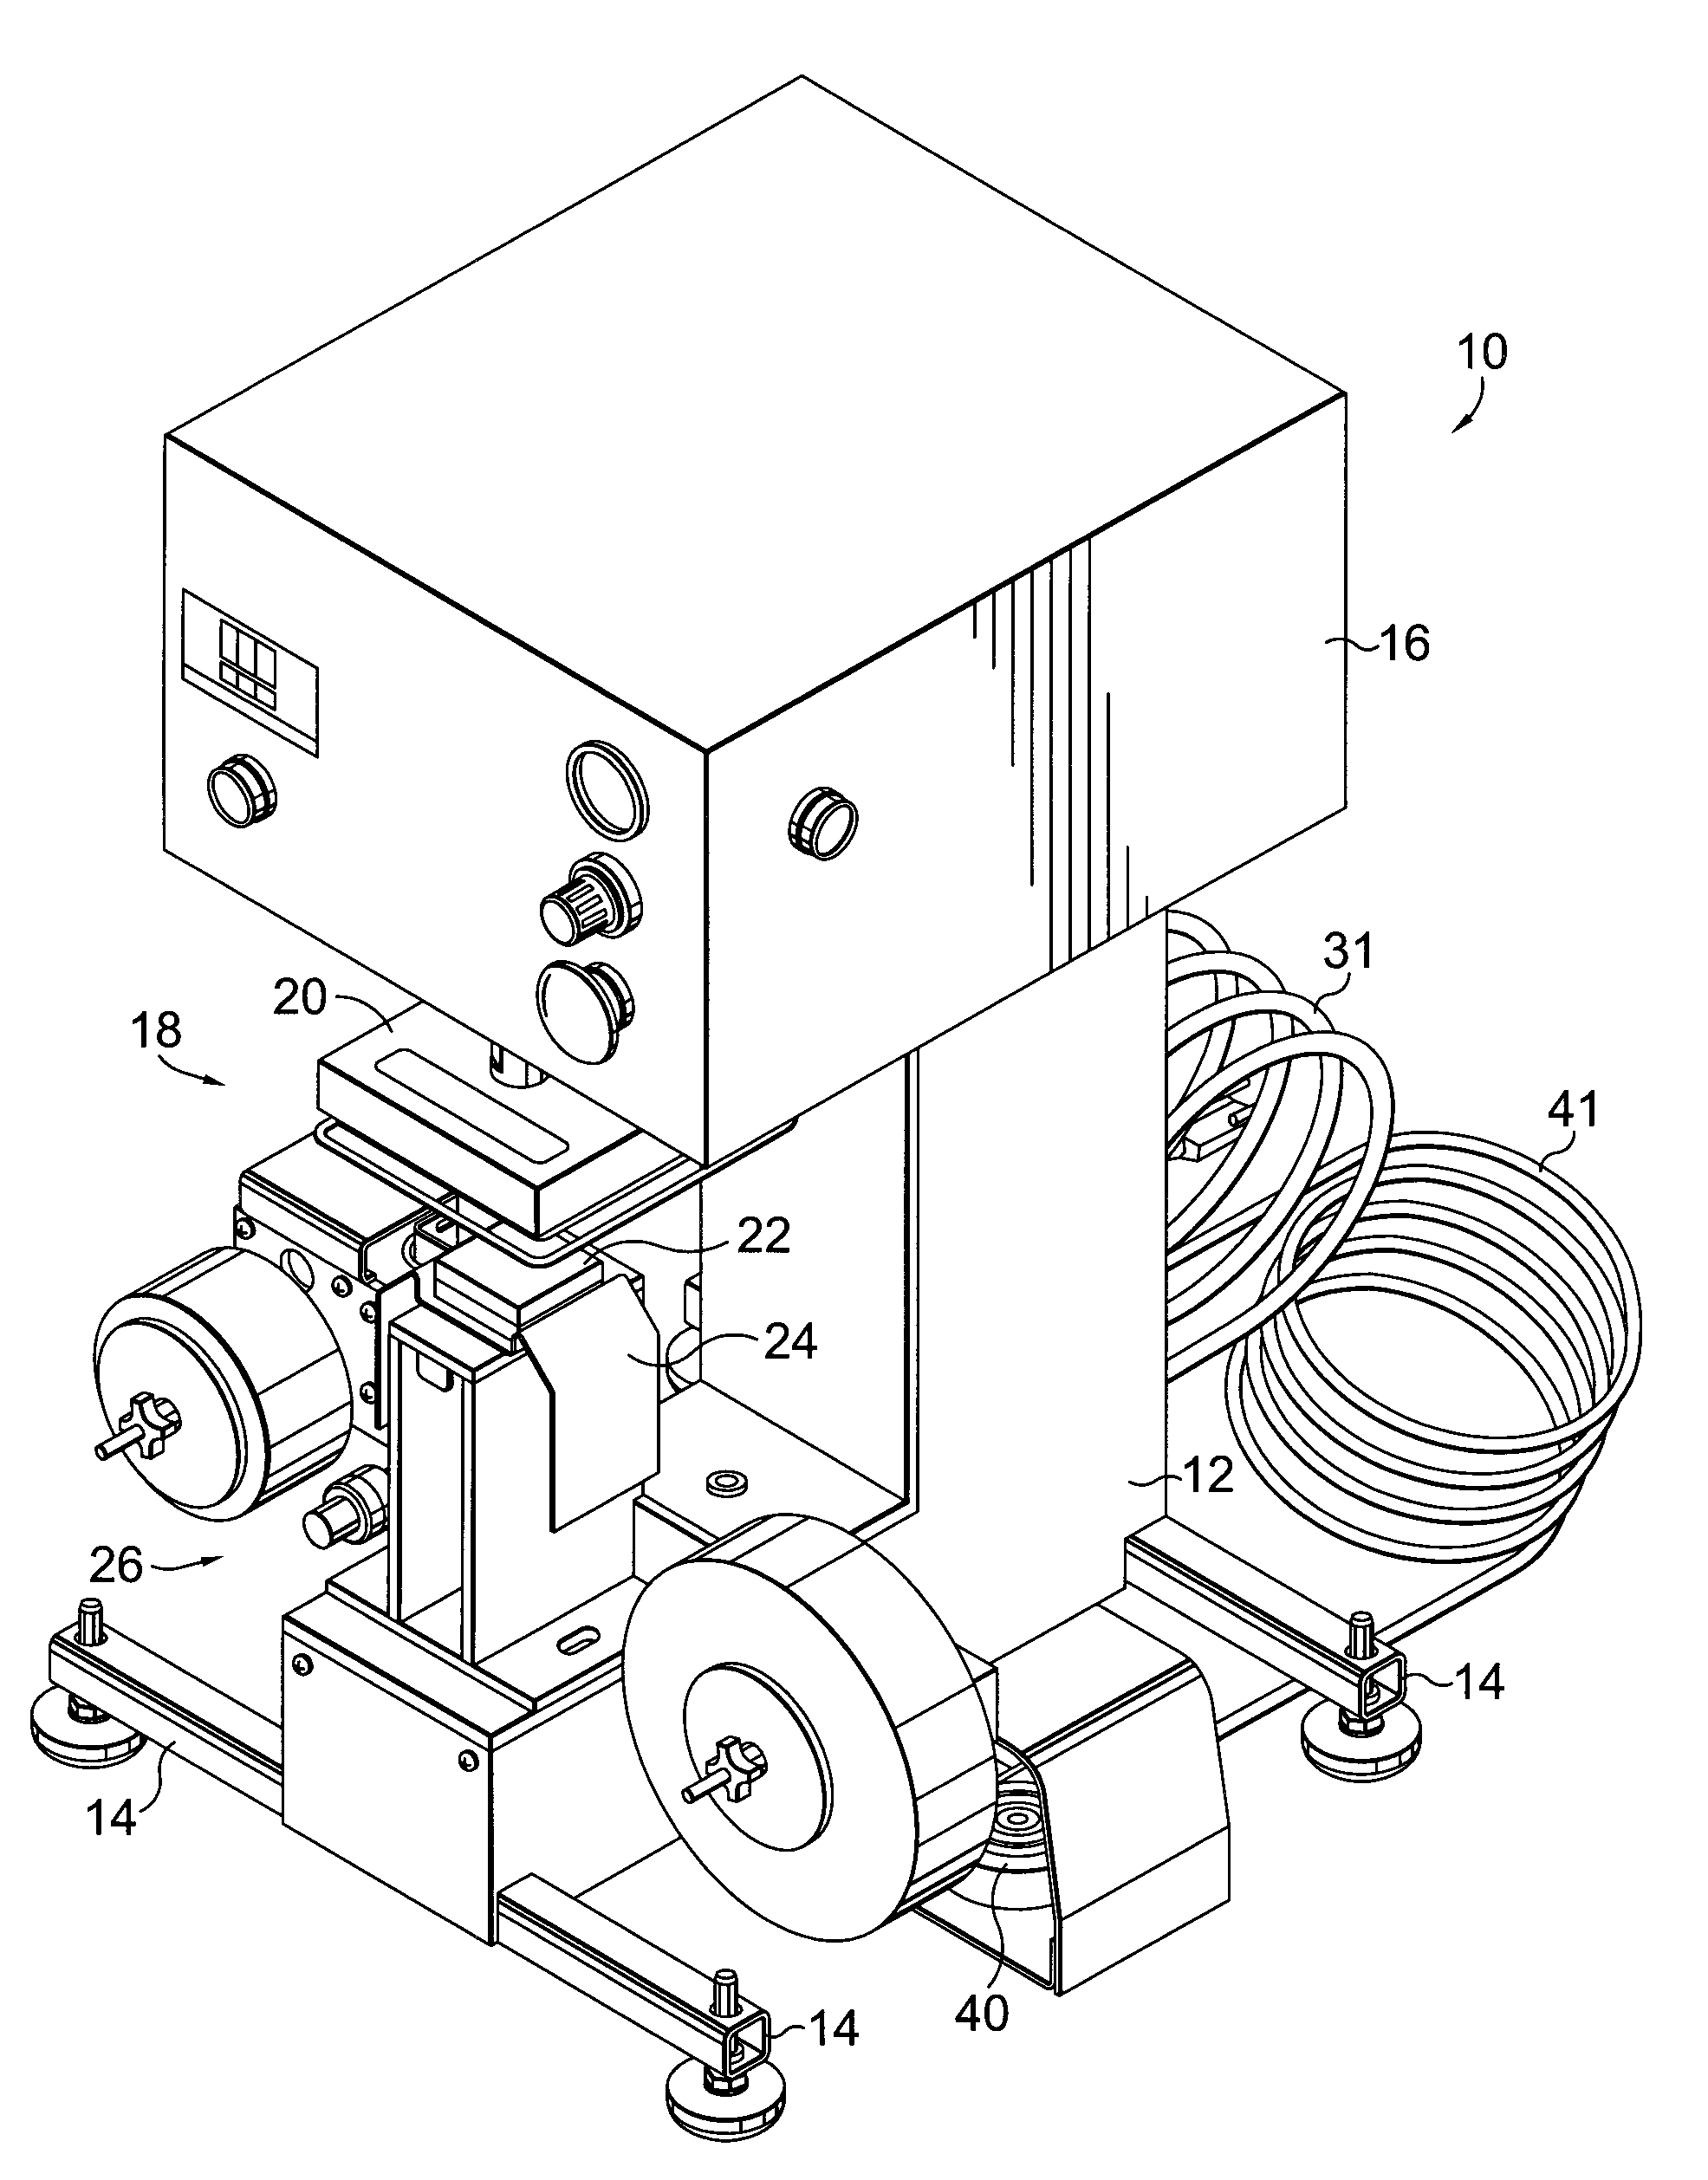 Roll-to-roll heat transfer machine